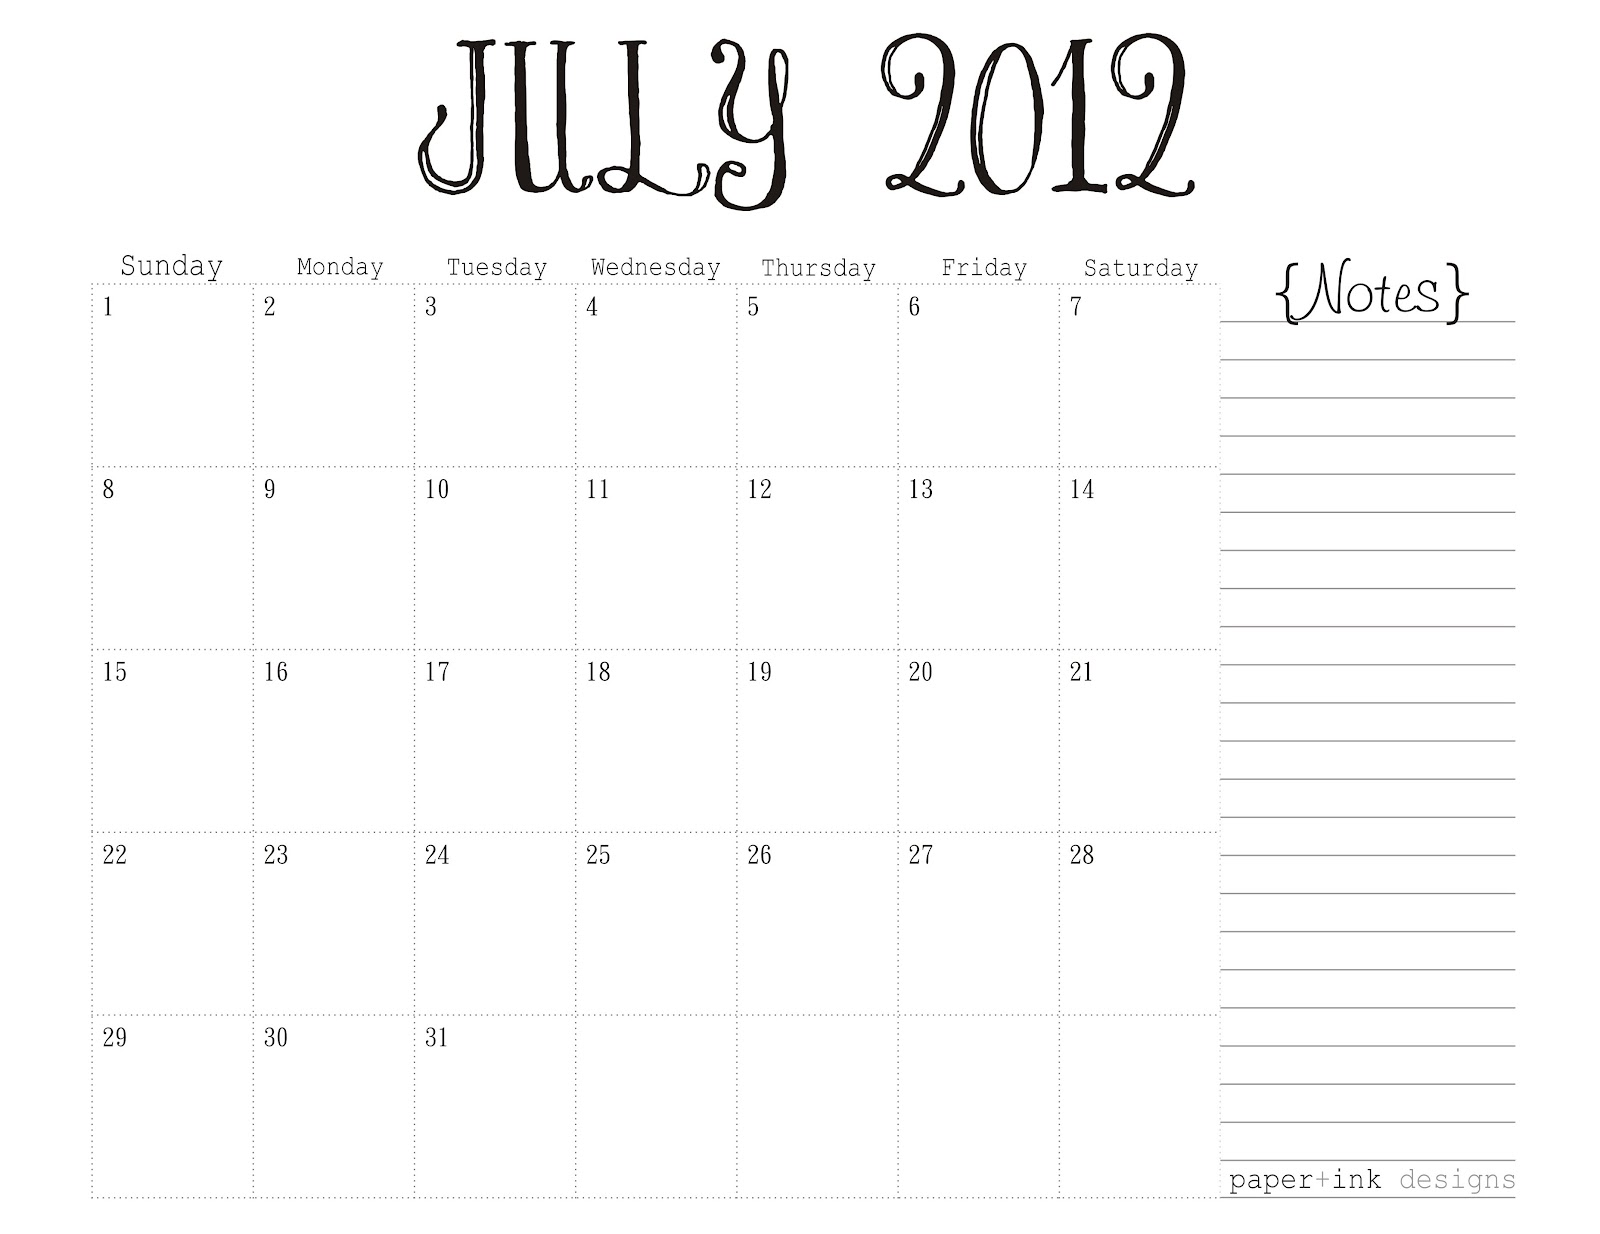 july-2049-printable-calendars